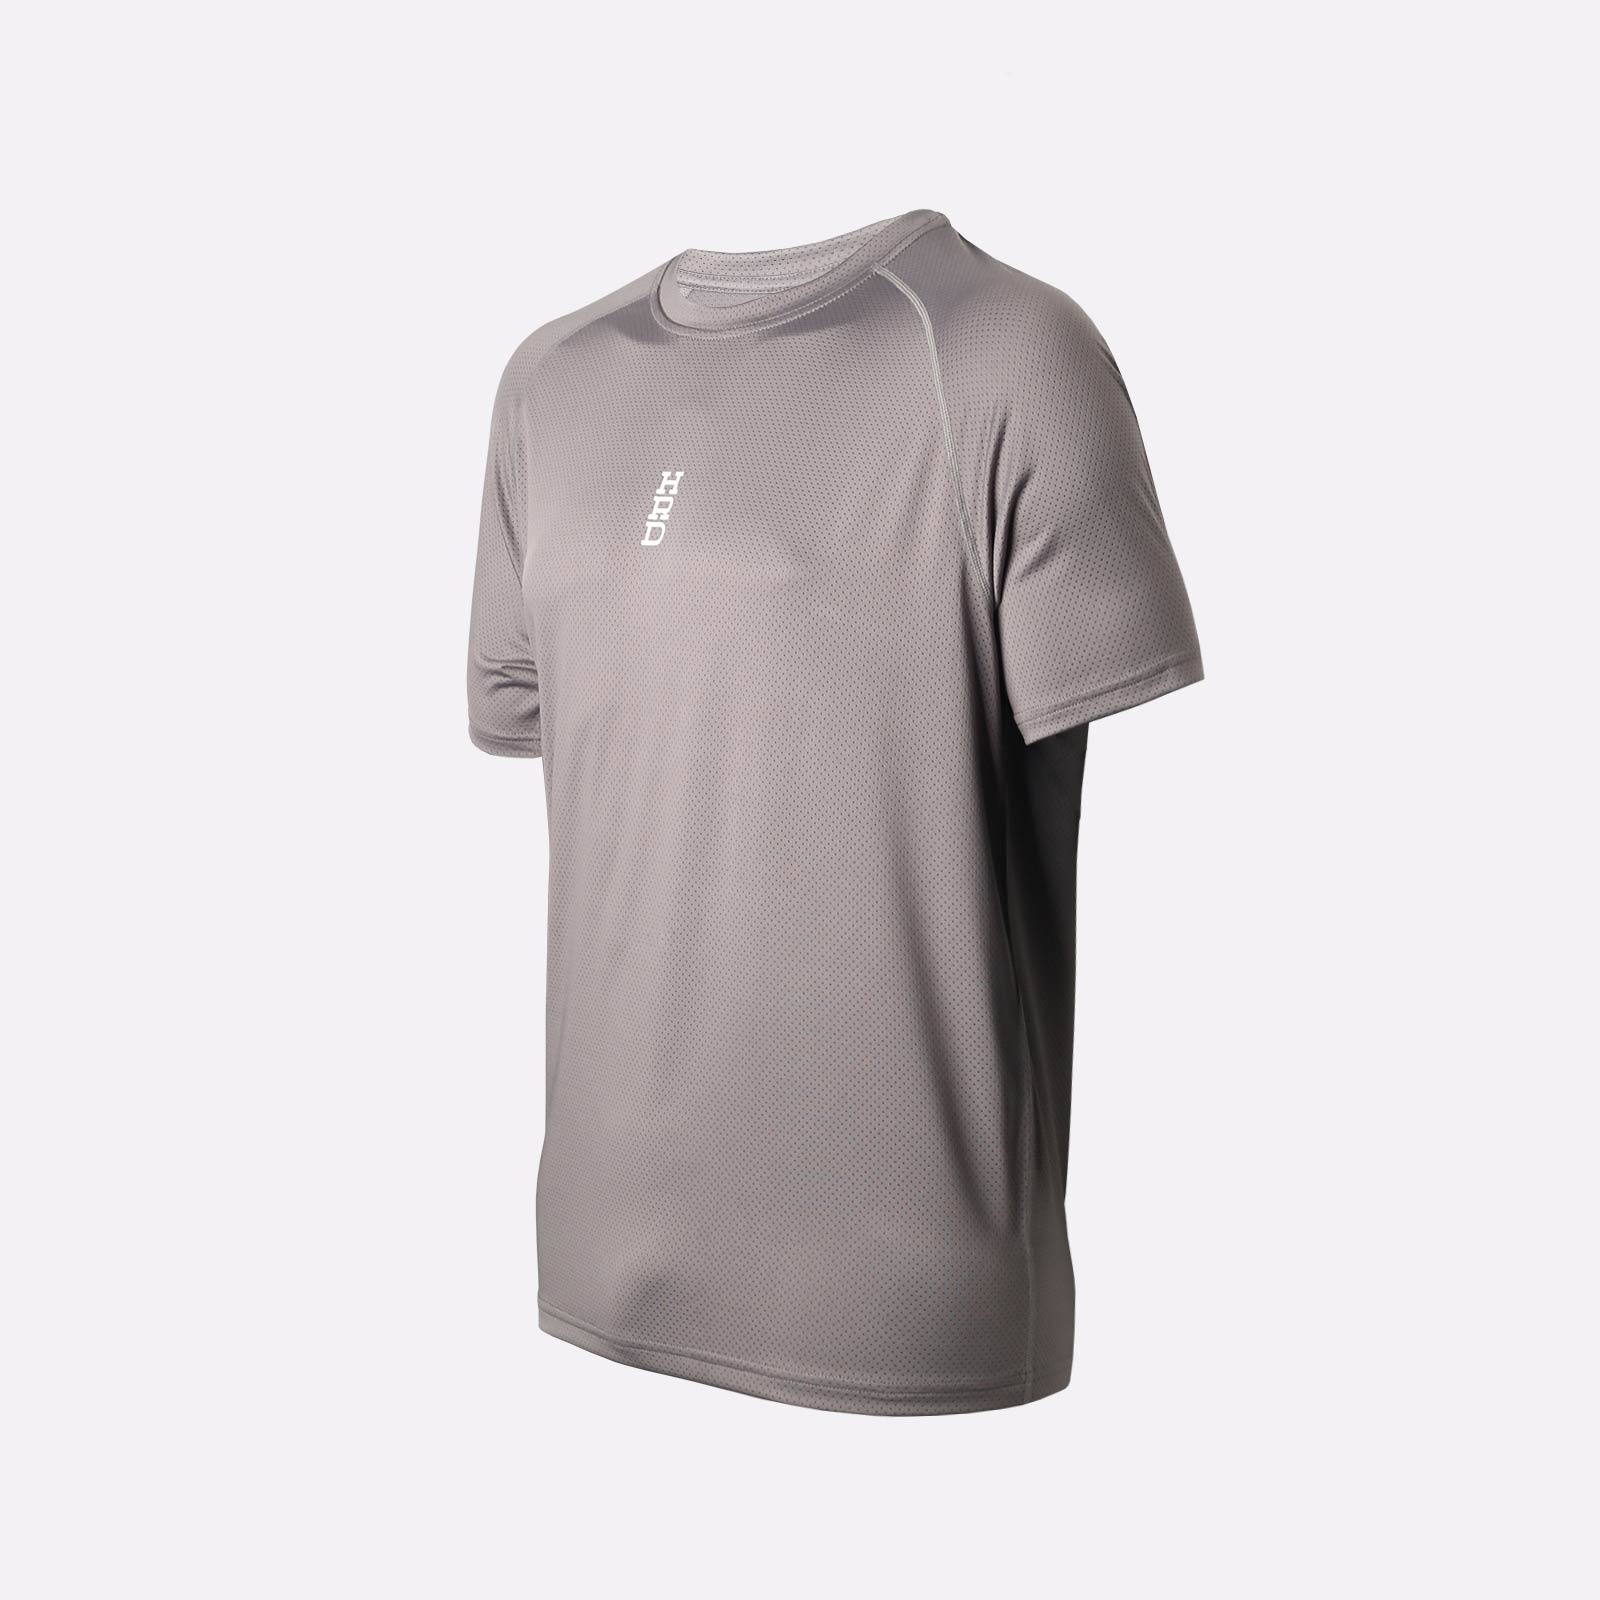 мужская футболка Hard TR03  (HR-TR03-grey)  - цена, описание, фото 1